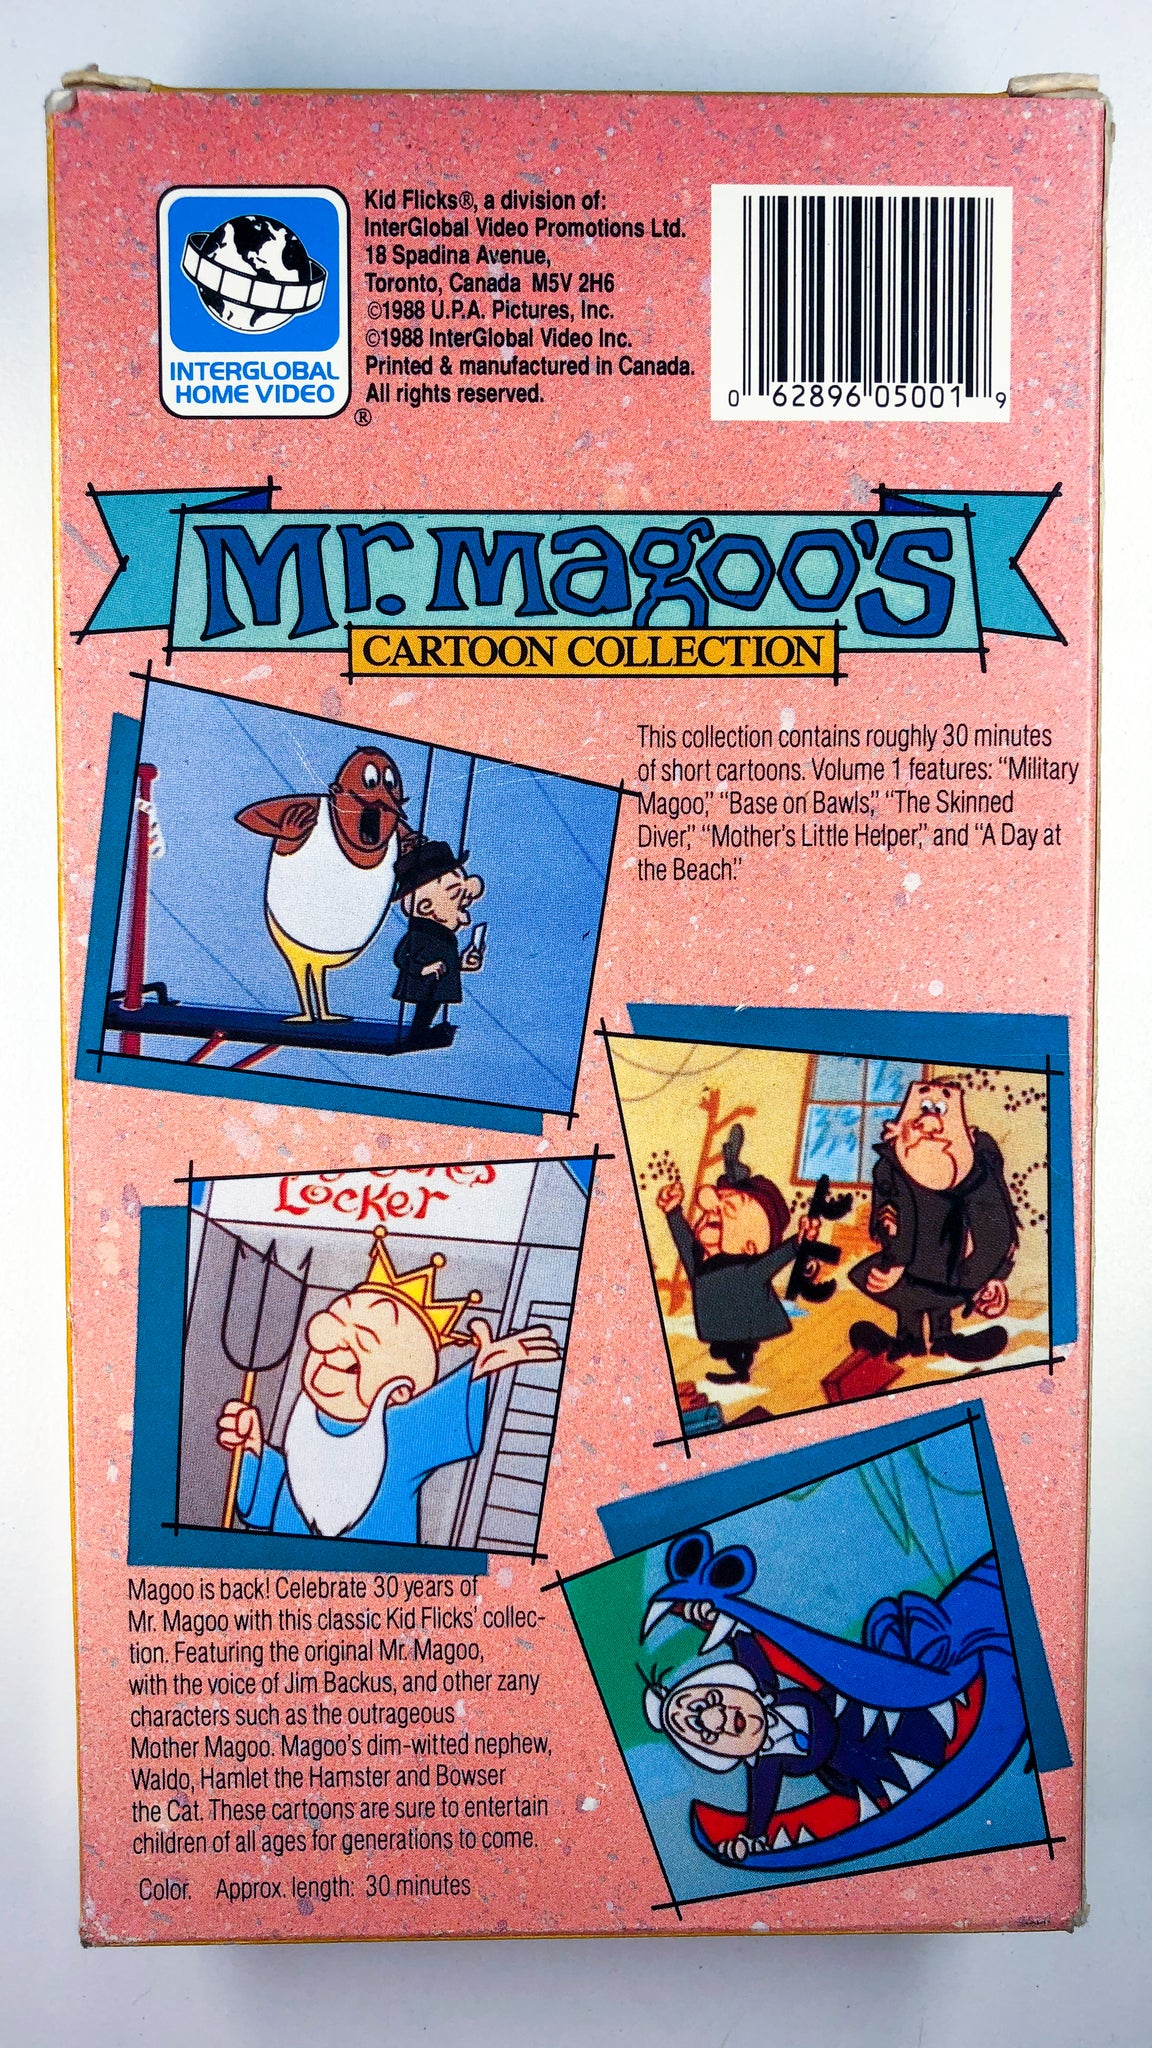 Mr. Magoo's Cartoon Collection Vol. 1: "Mother's Little Helper"